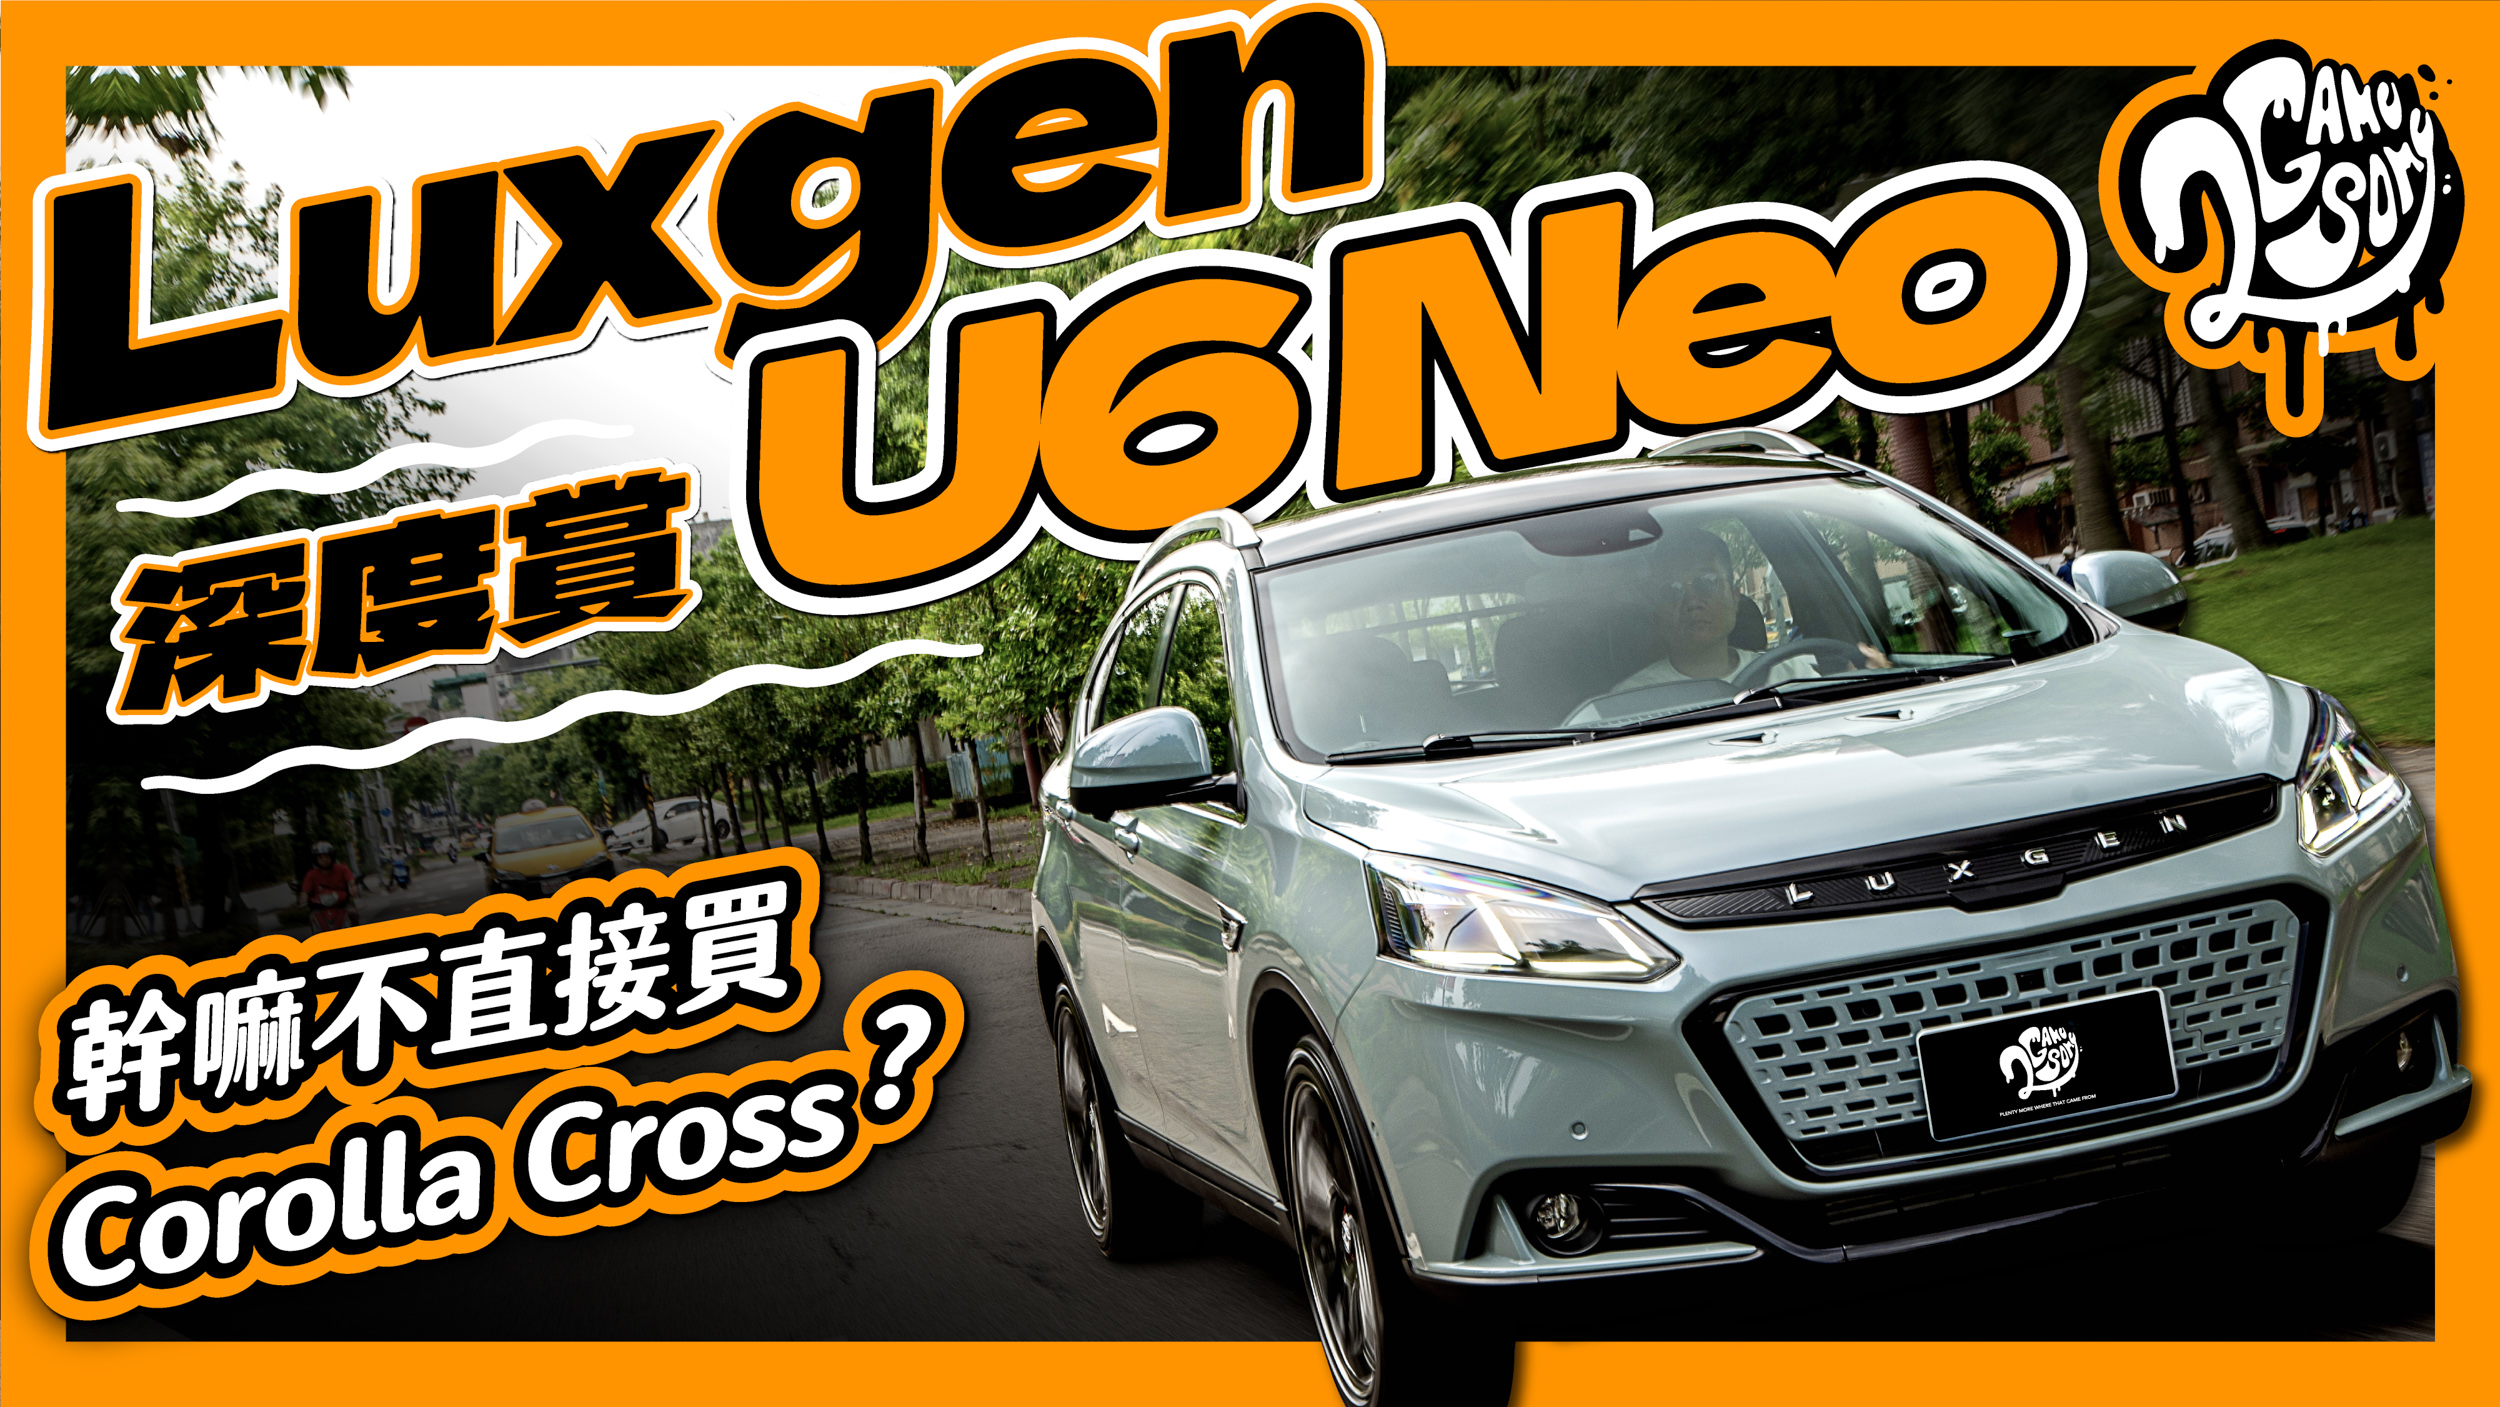 Luxgen U6 NEO 小改還有競爭力？幹嘛不直接買 Toyota Corolla Cross 就好？